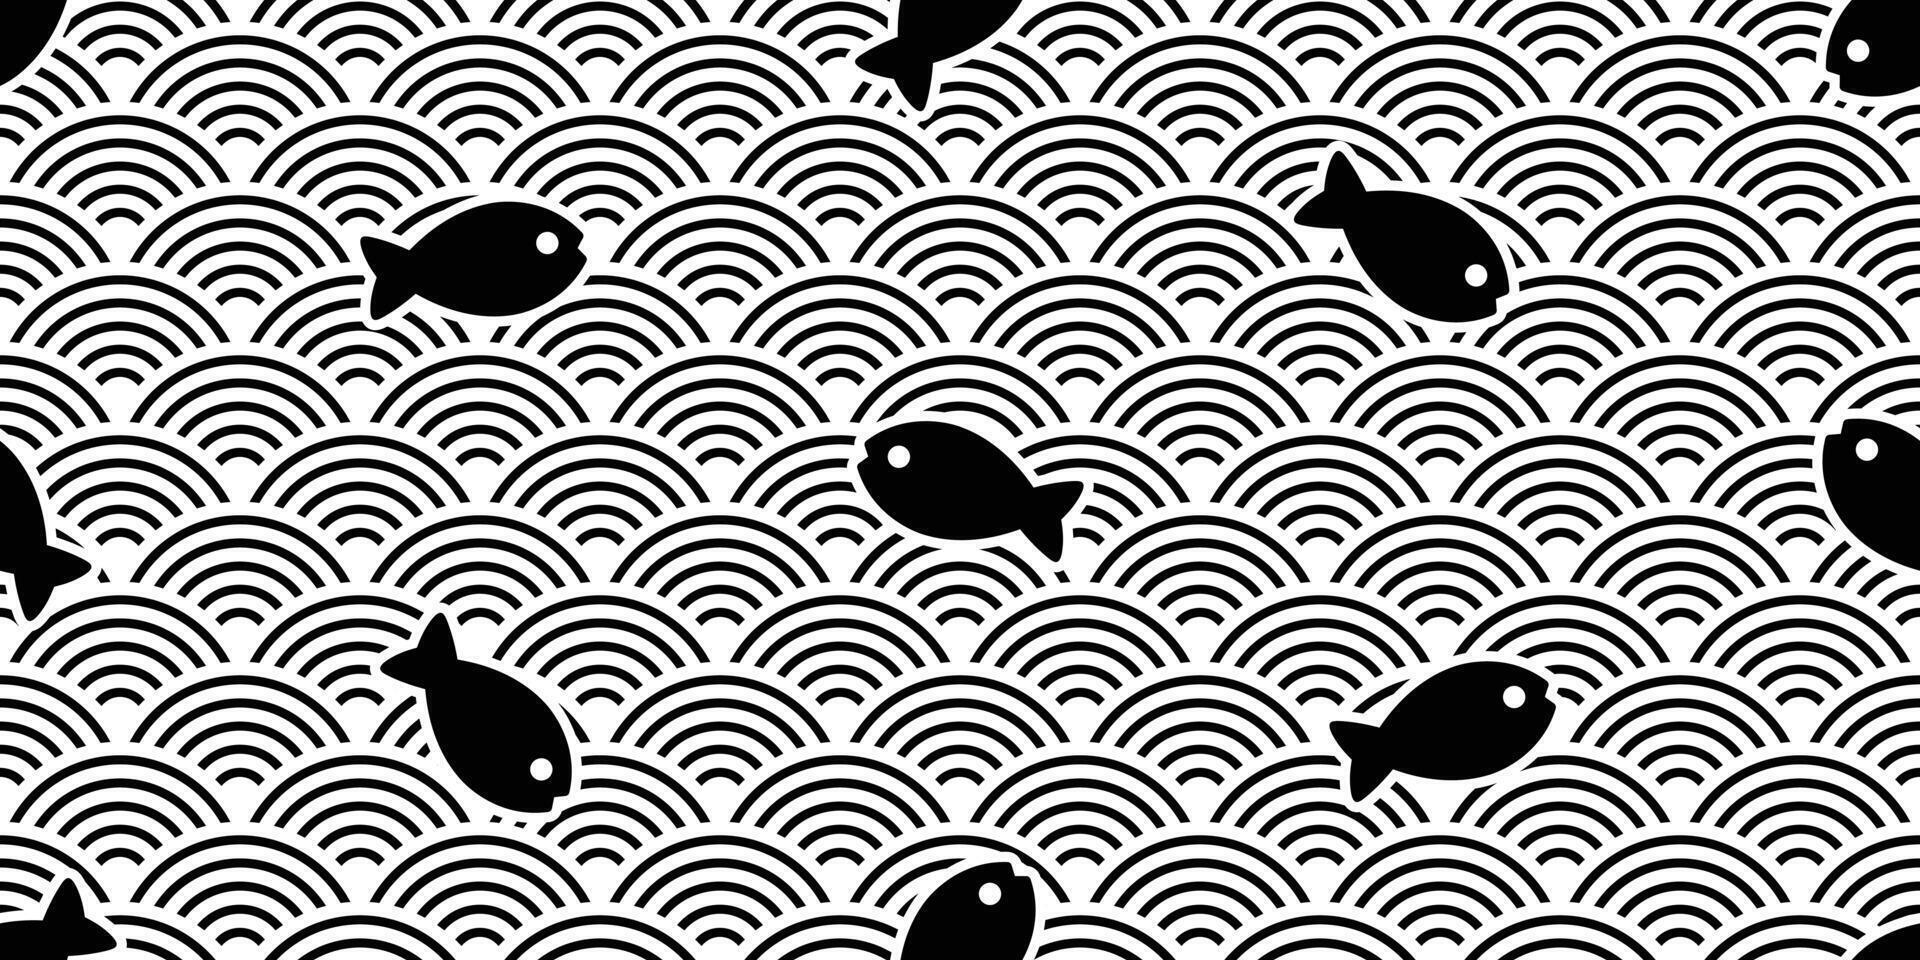 fish Seamless pattern salmon vector tuna japan wave shark dolphin doodle icon cartoon ocean sea scarf isolated repeat wallpaper tile background illustration design